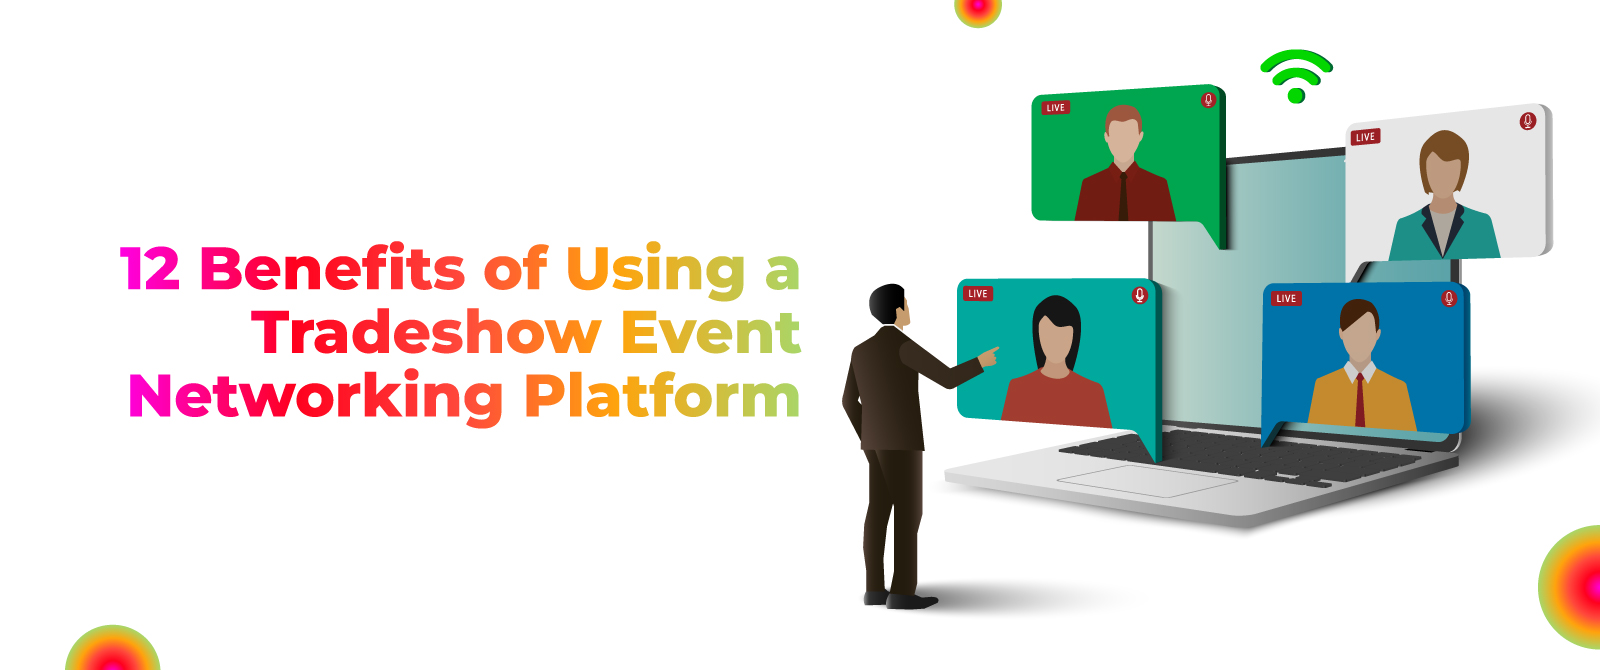 12 Benefits of Using a Tradeshow Event Networking Platform